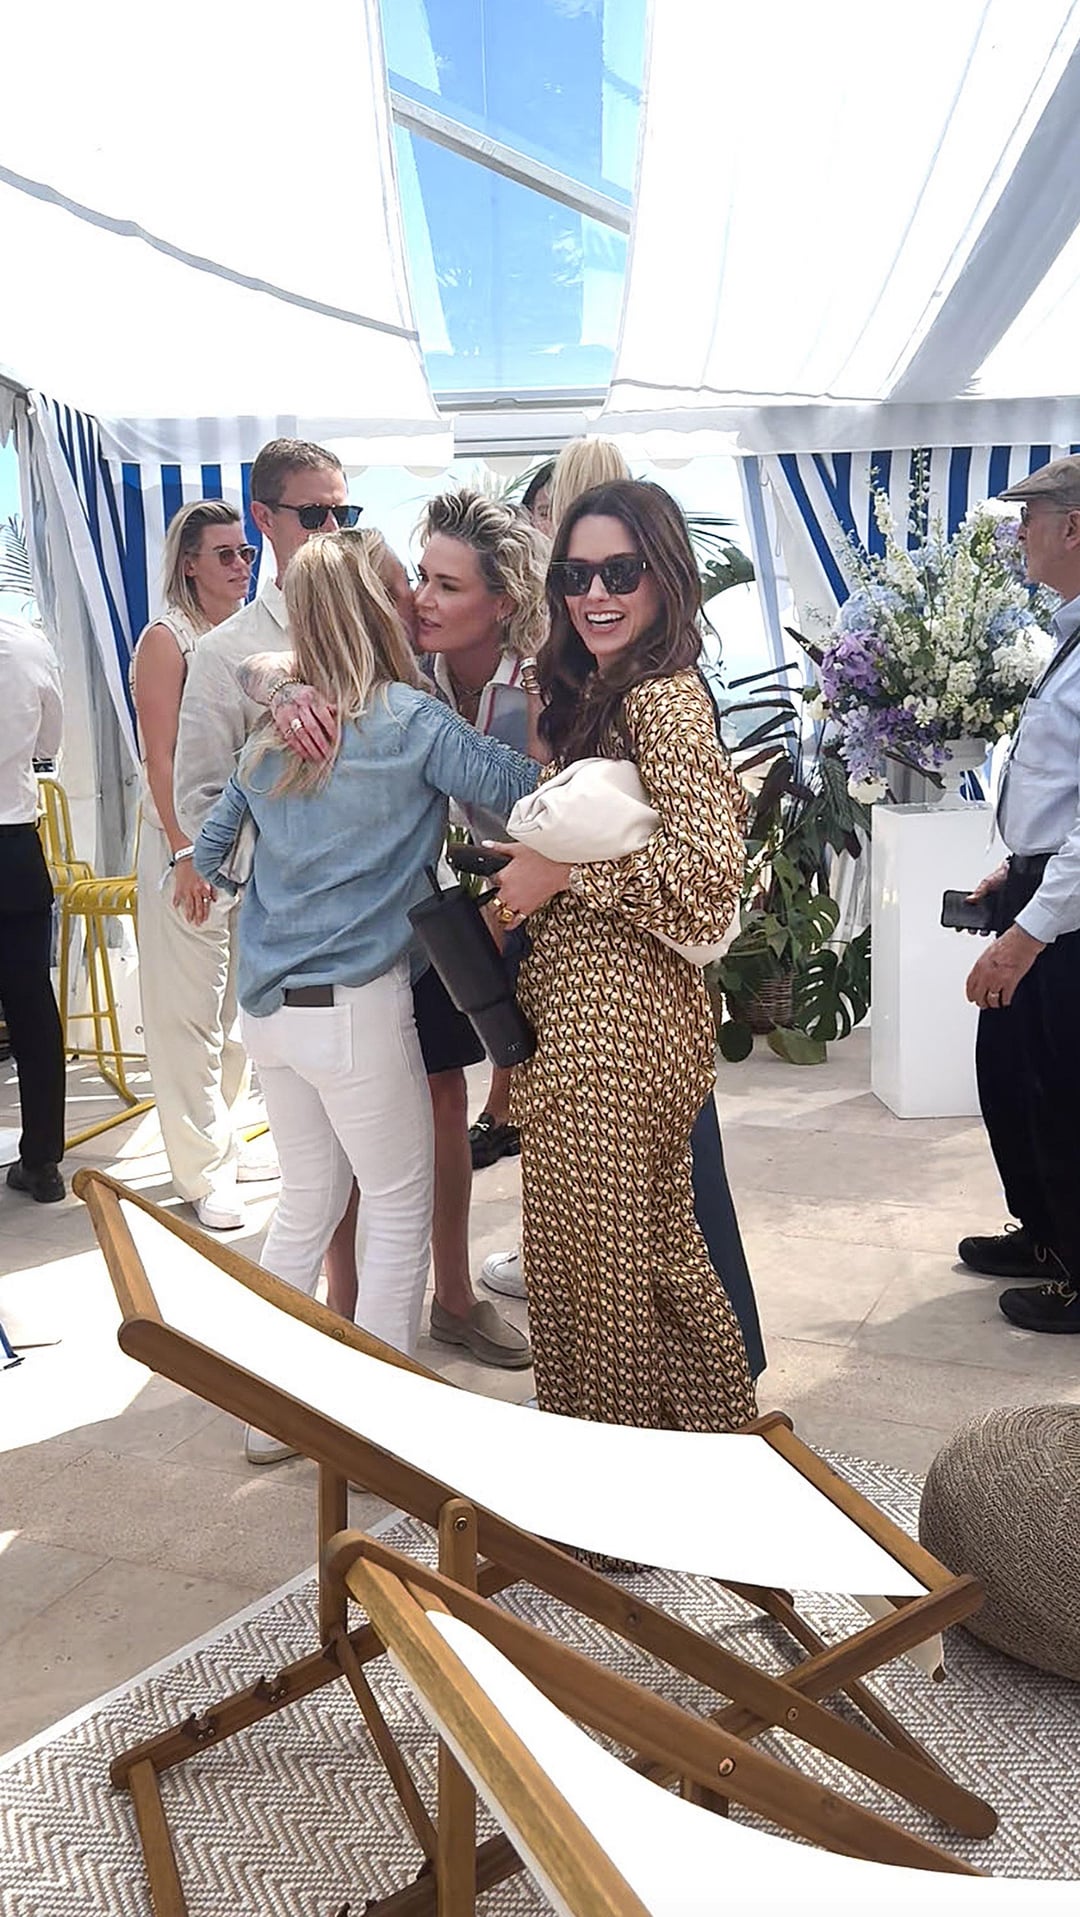 Sophia Bush supporting girlfriend Ashlyn Harris during her Cannes Lions